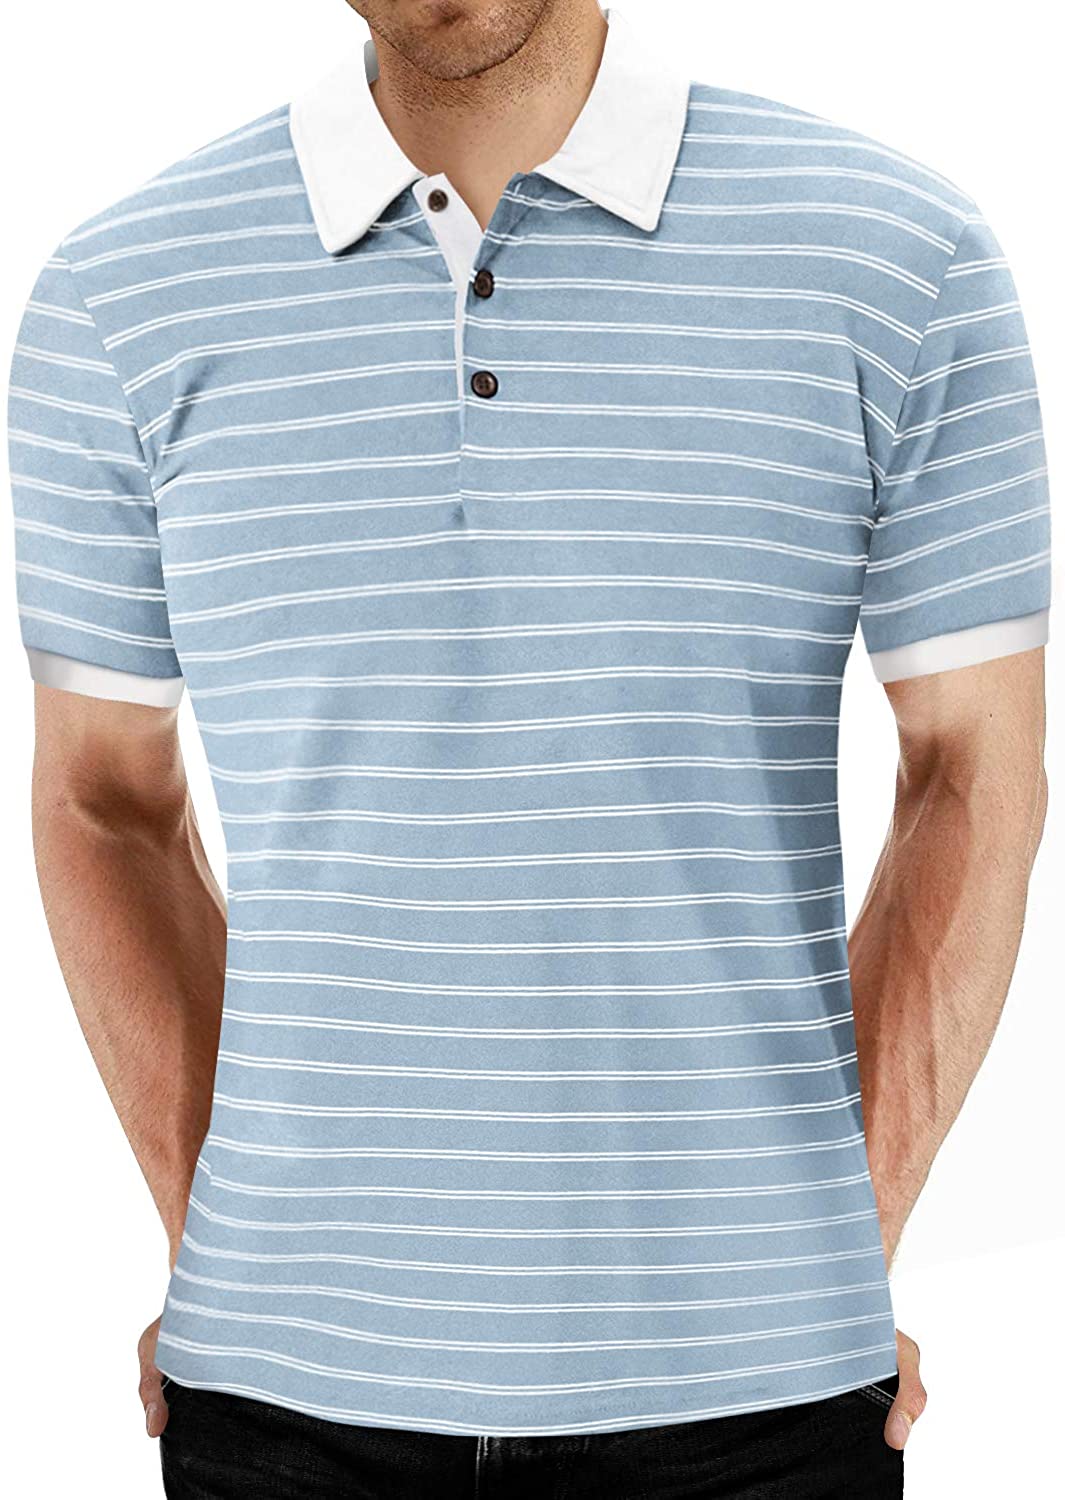 MLANM Men's Polo Shirt Short/Long Sleeve Casual Slim-fit Basic Designed Stripe Cotton Shirts